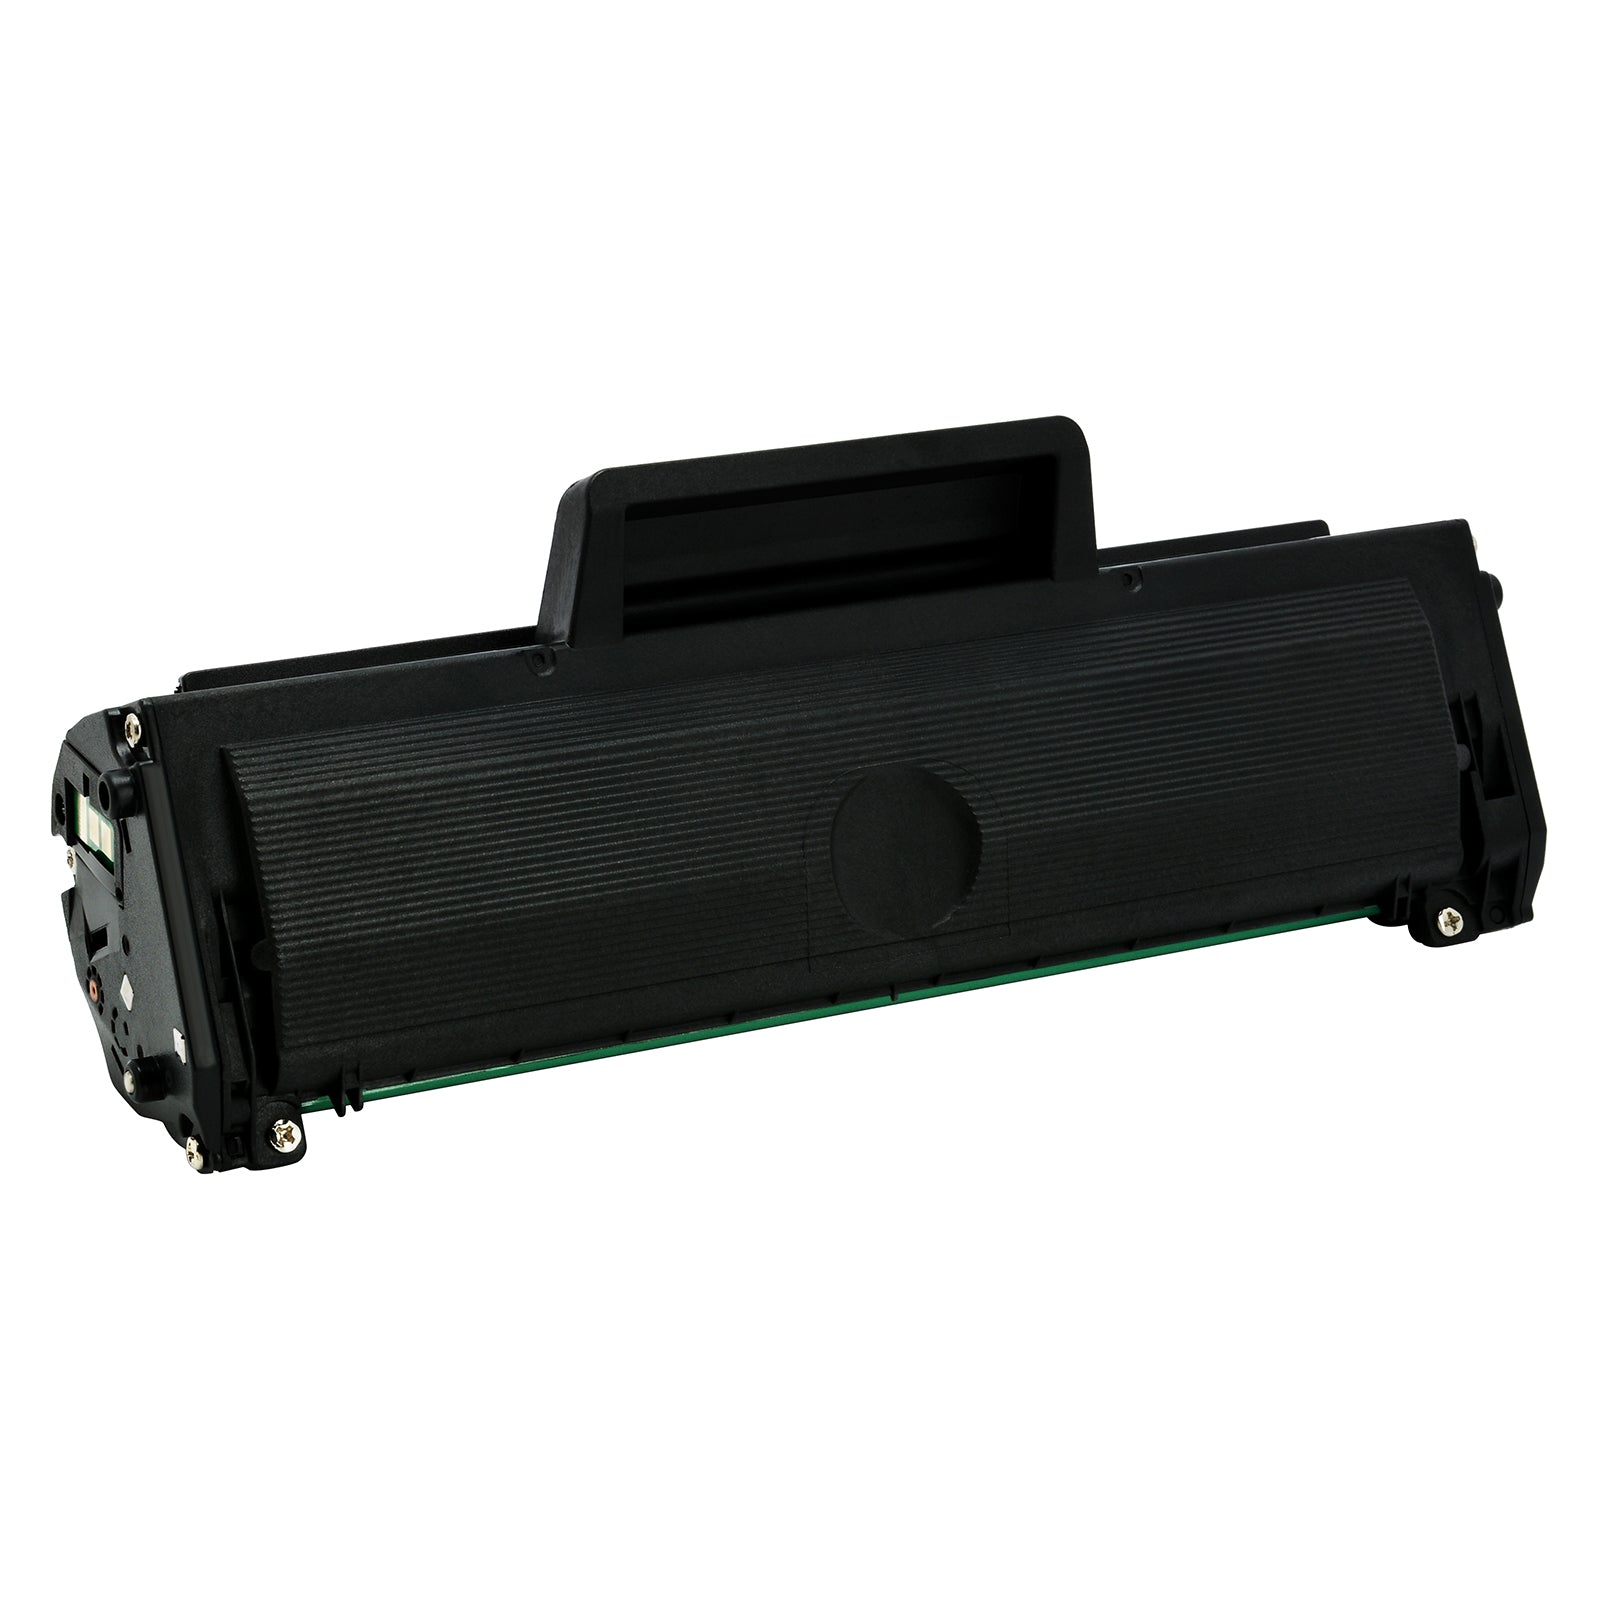 SKY  104 Compatible Toner Cartridge MLT-D104S for Samsung ML-1660